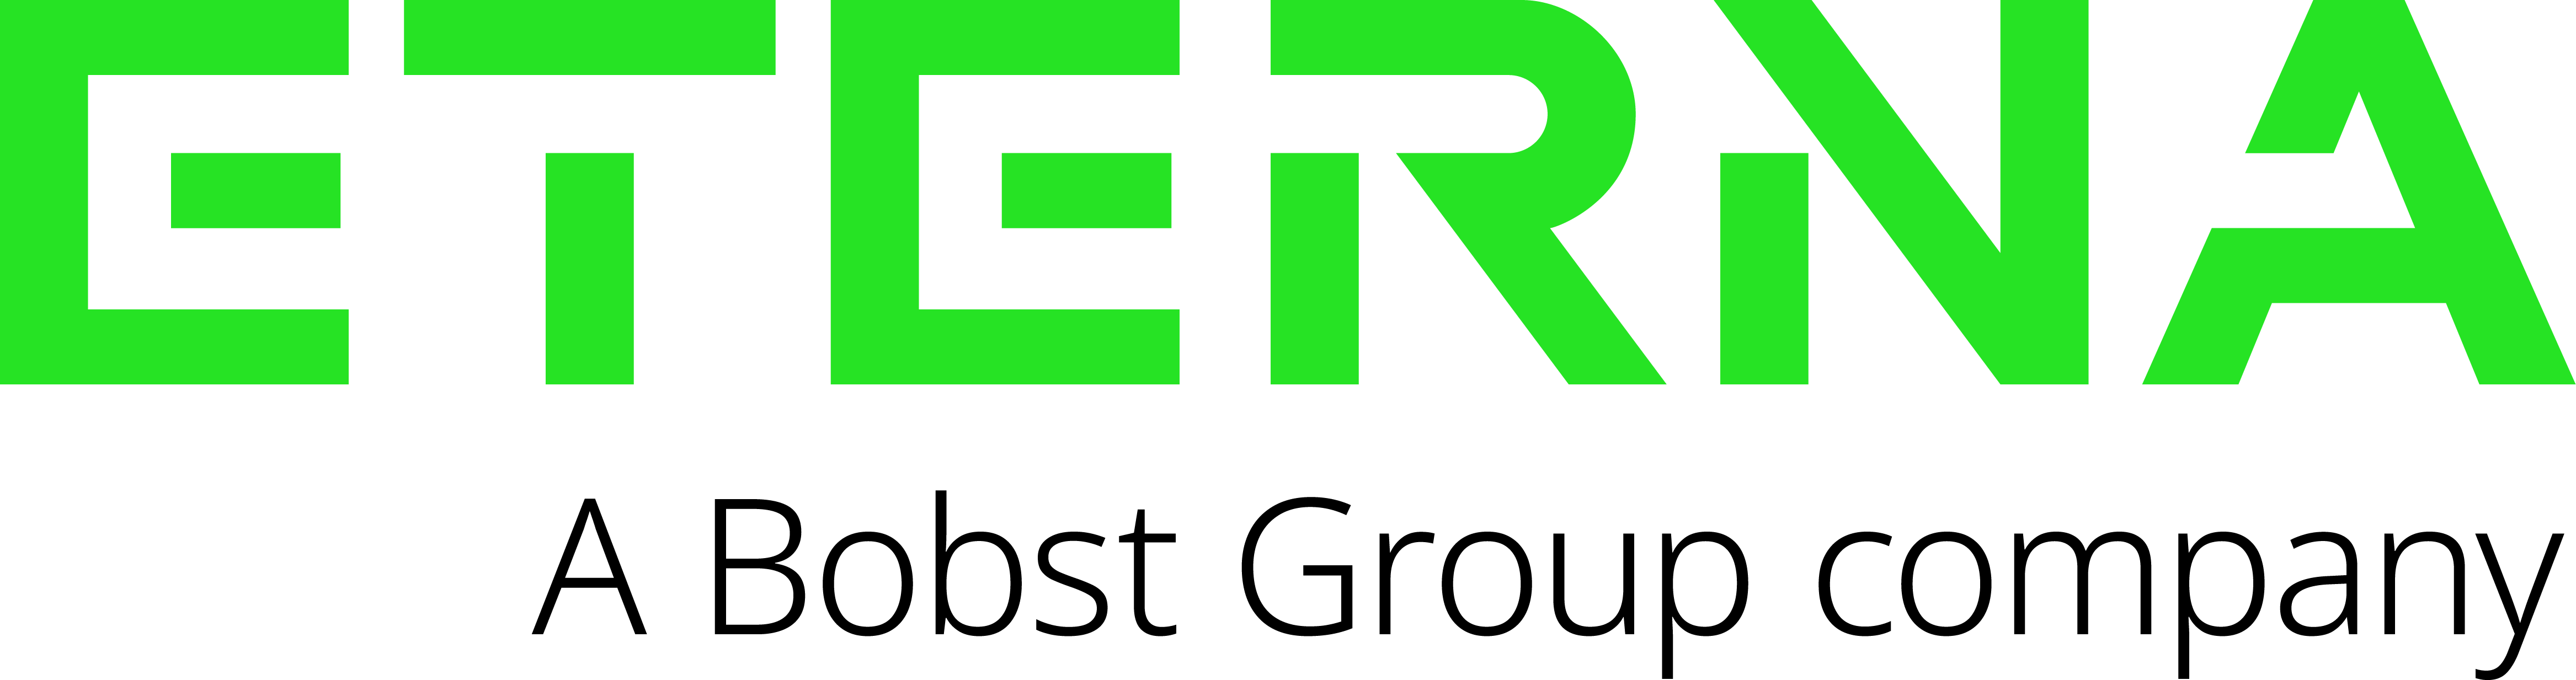 Eterna_logo_web